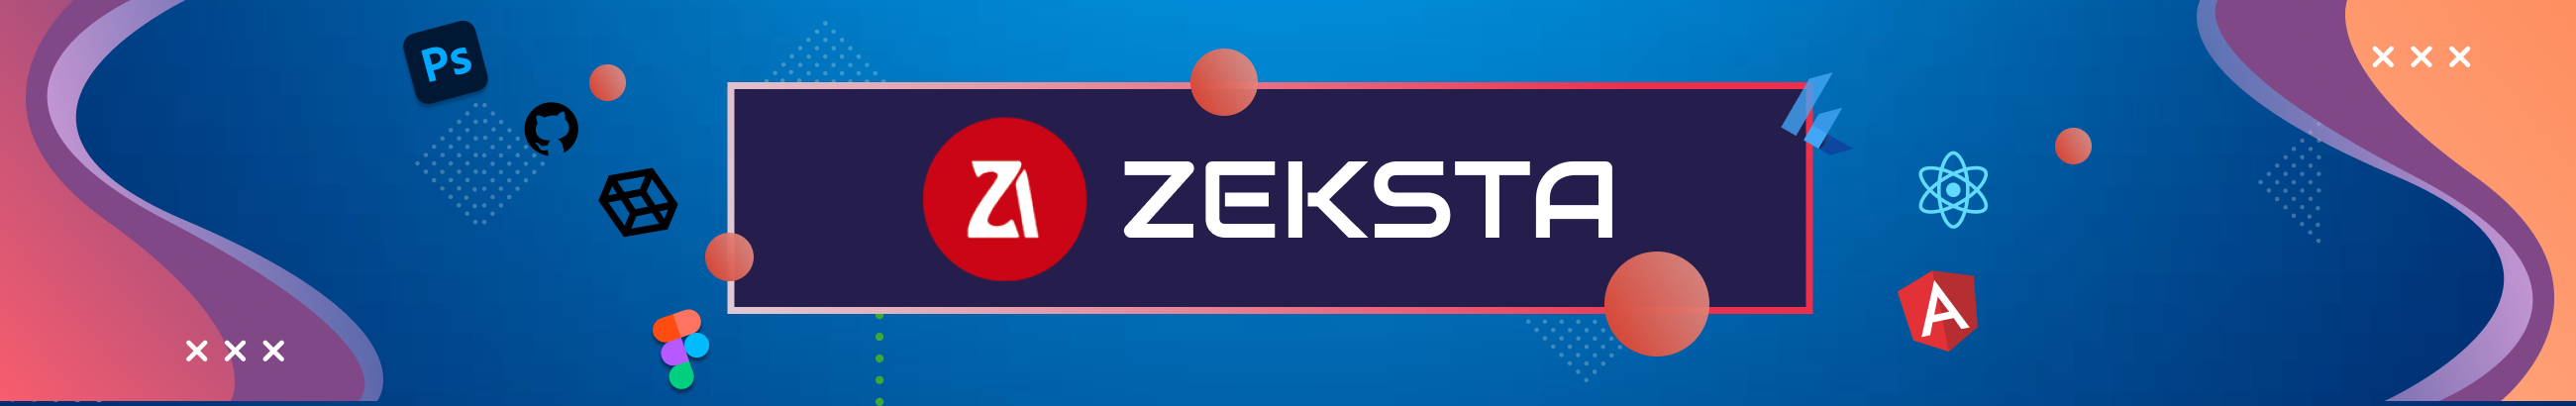 Zeksta Technologys profilbanner